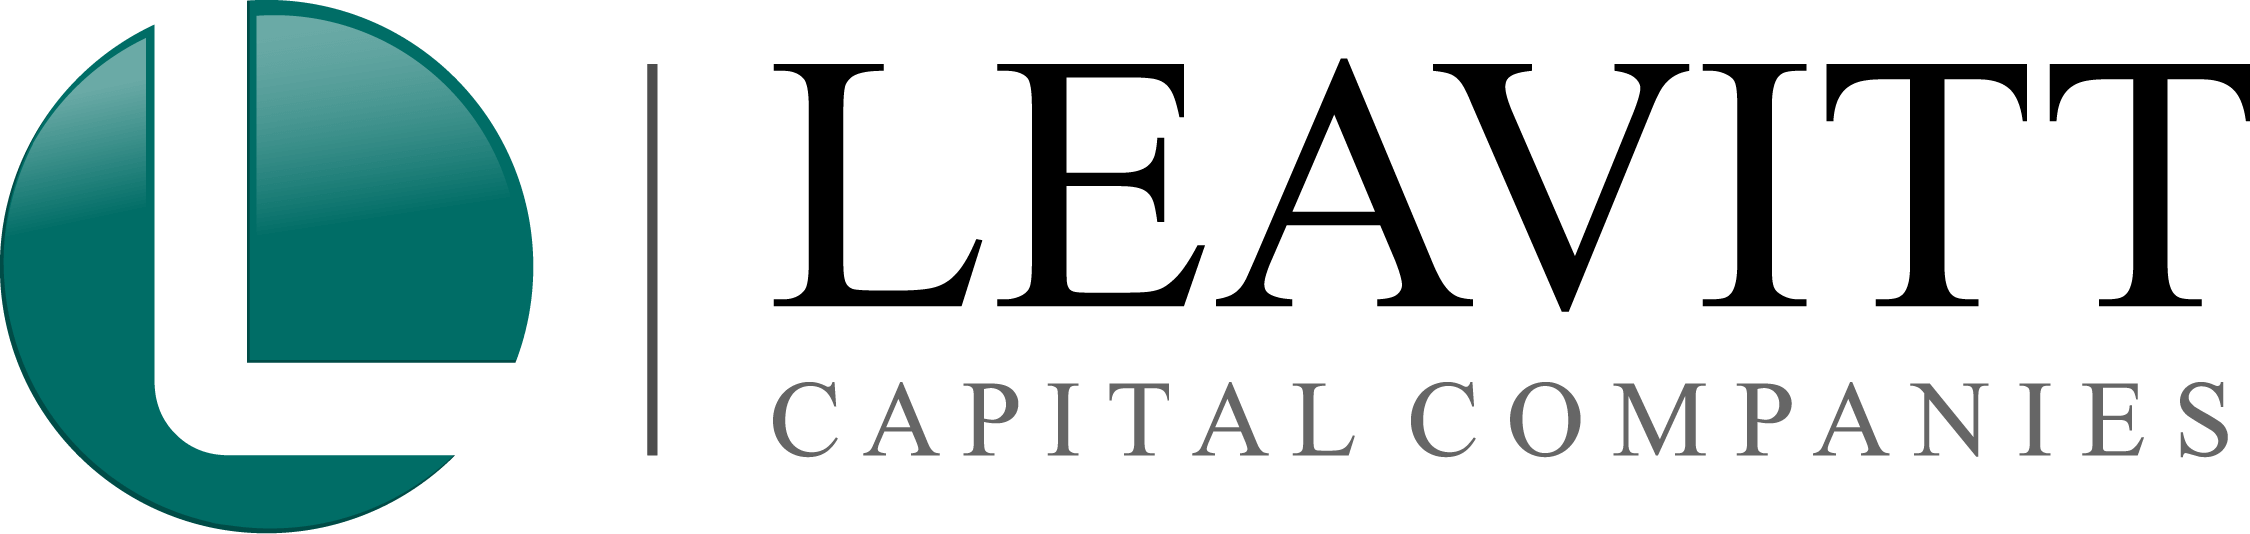 Leavitt Capital Companies